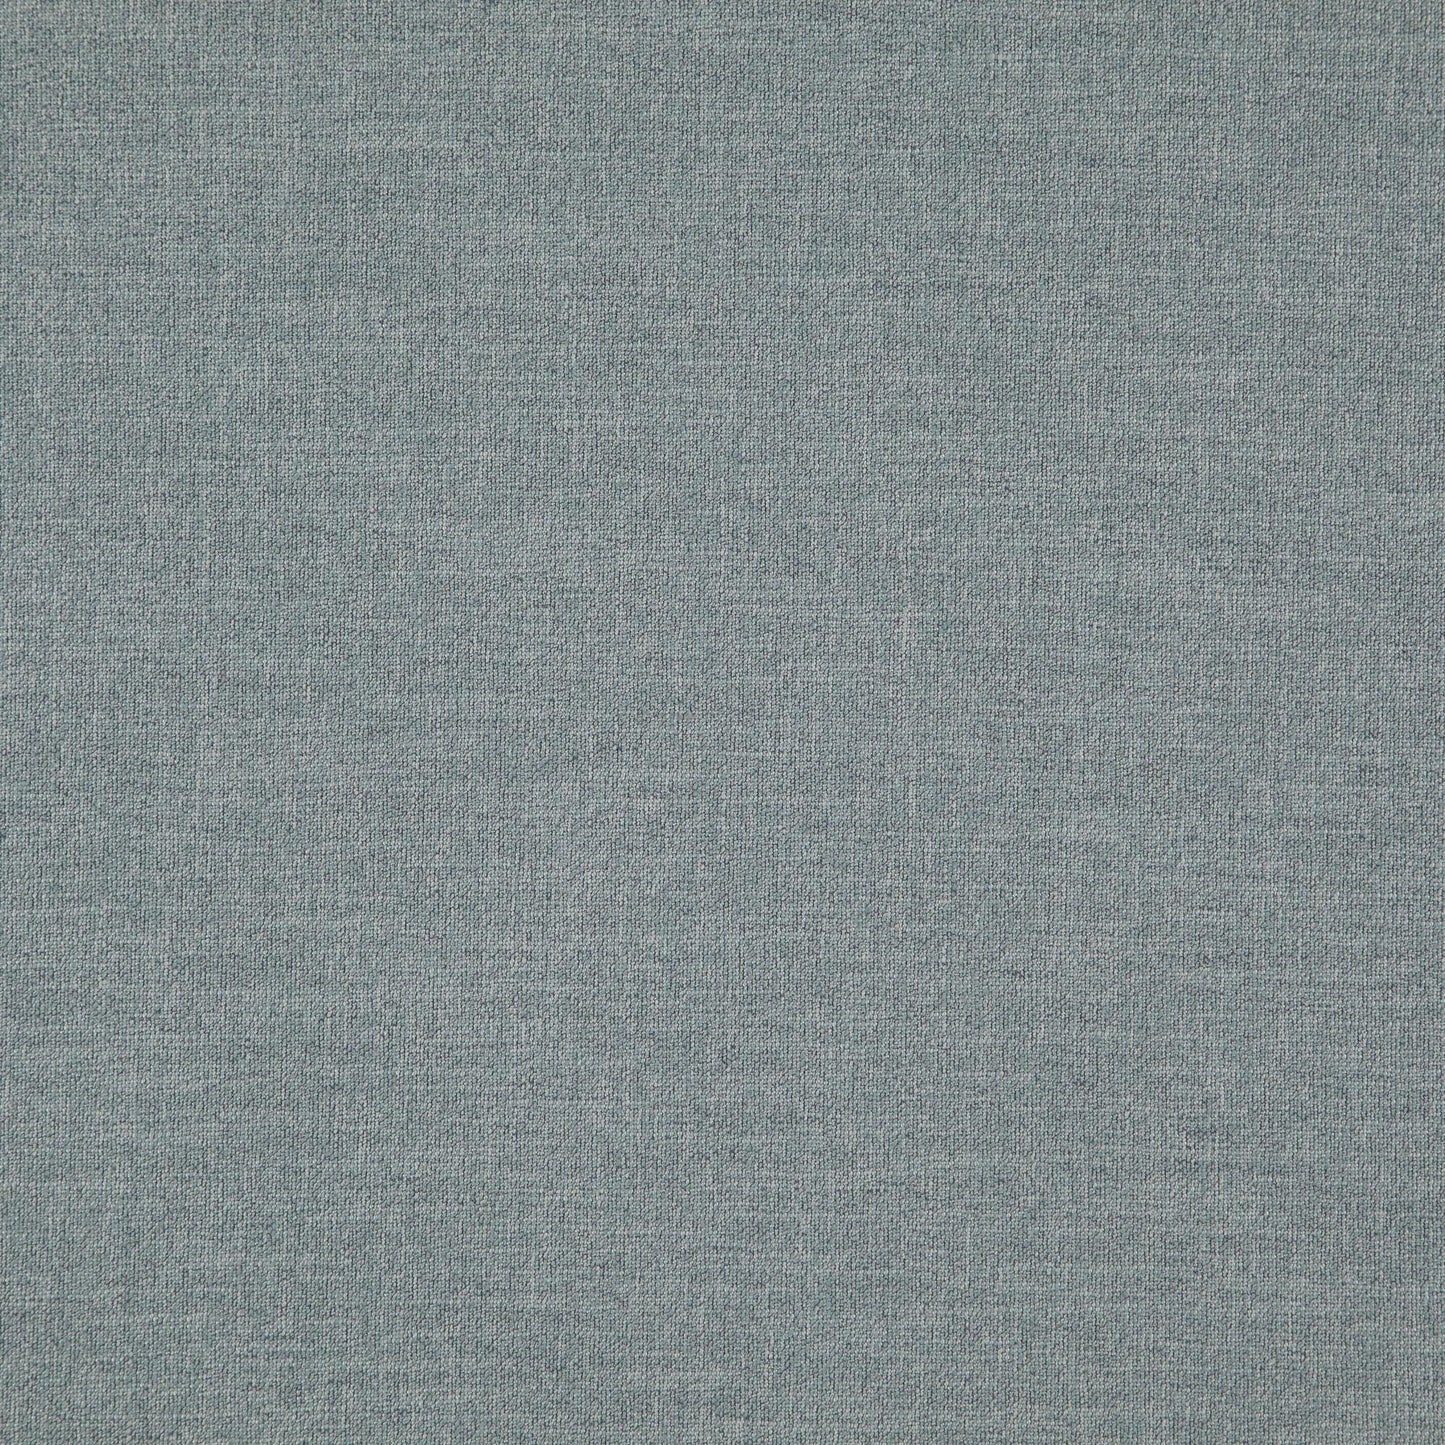 Upholstery Fabric Eco Friendly Bella Medium Grey Blue